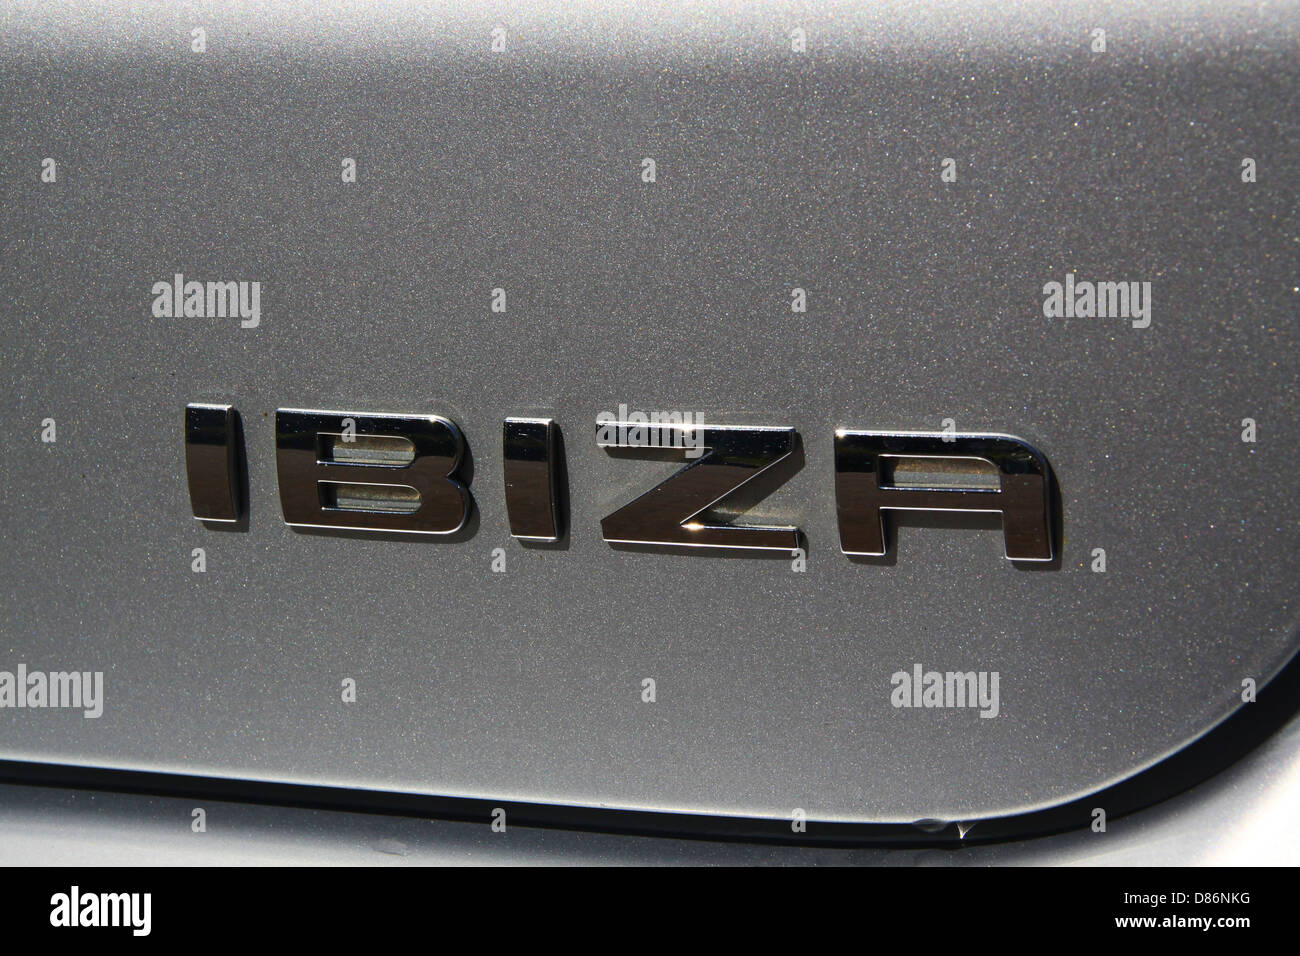 Seat Ibiza car badge Stock Photo